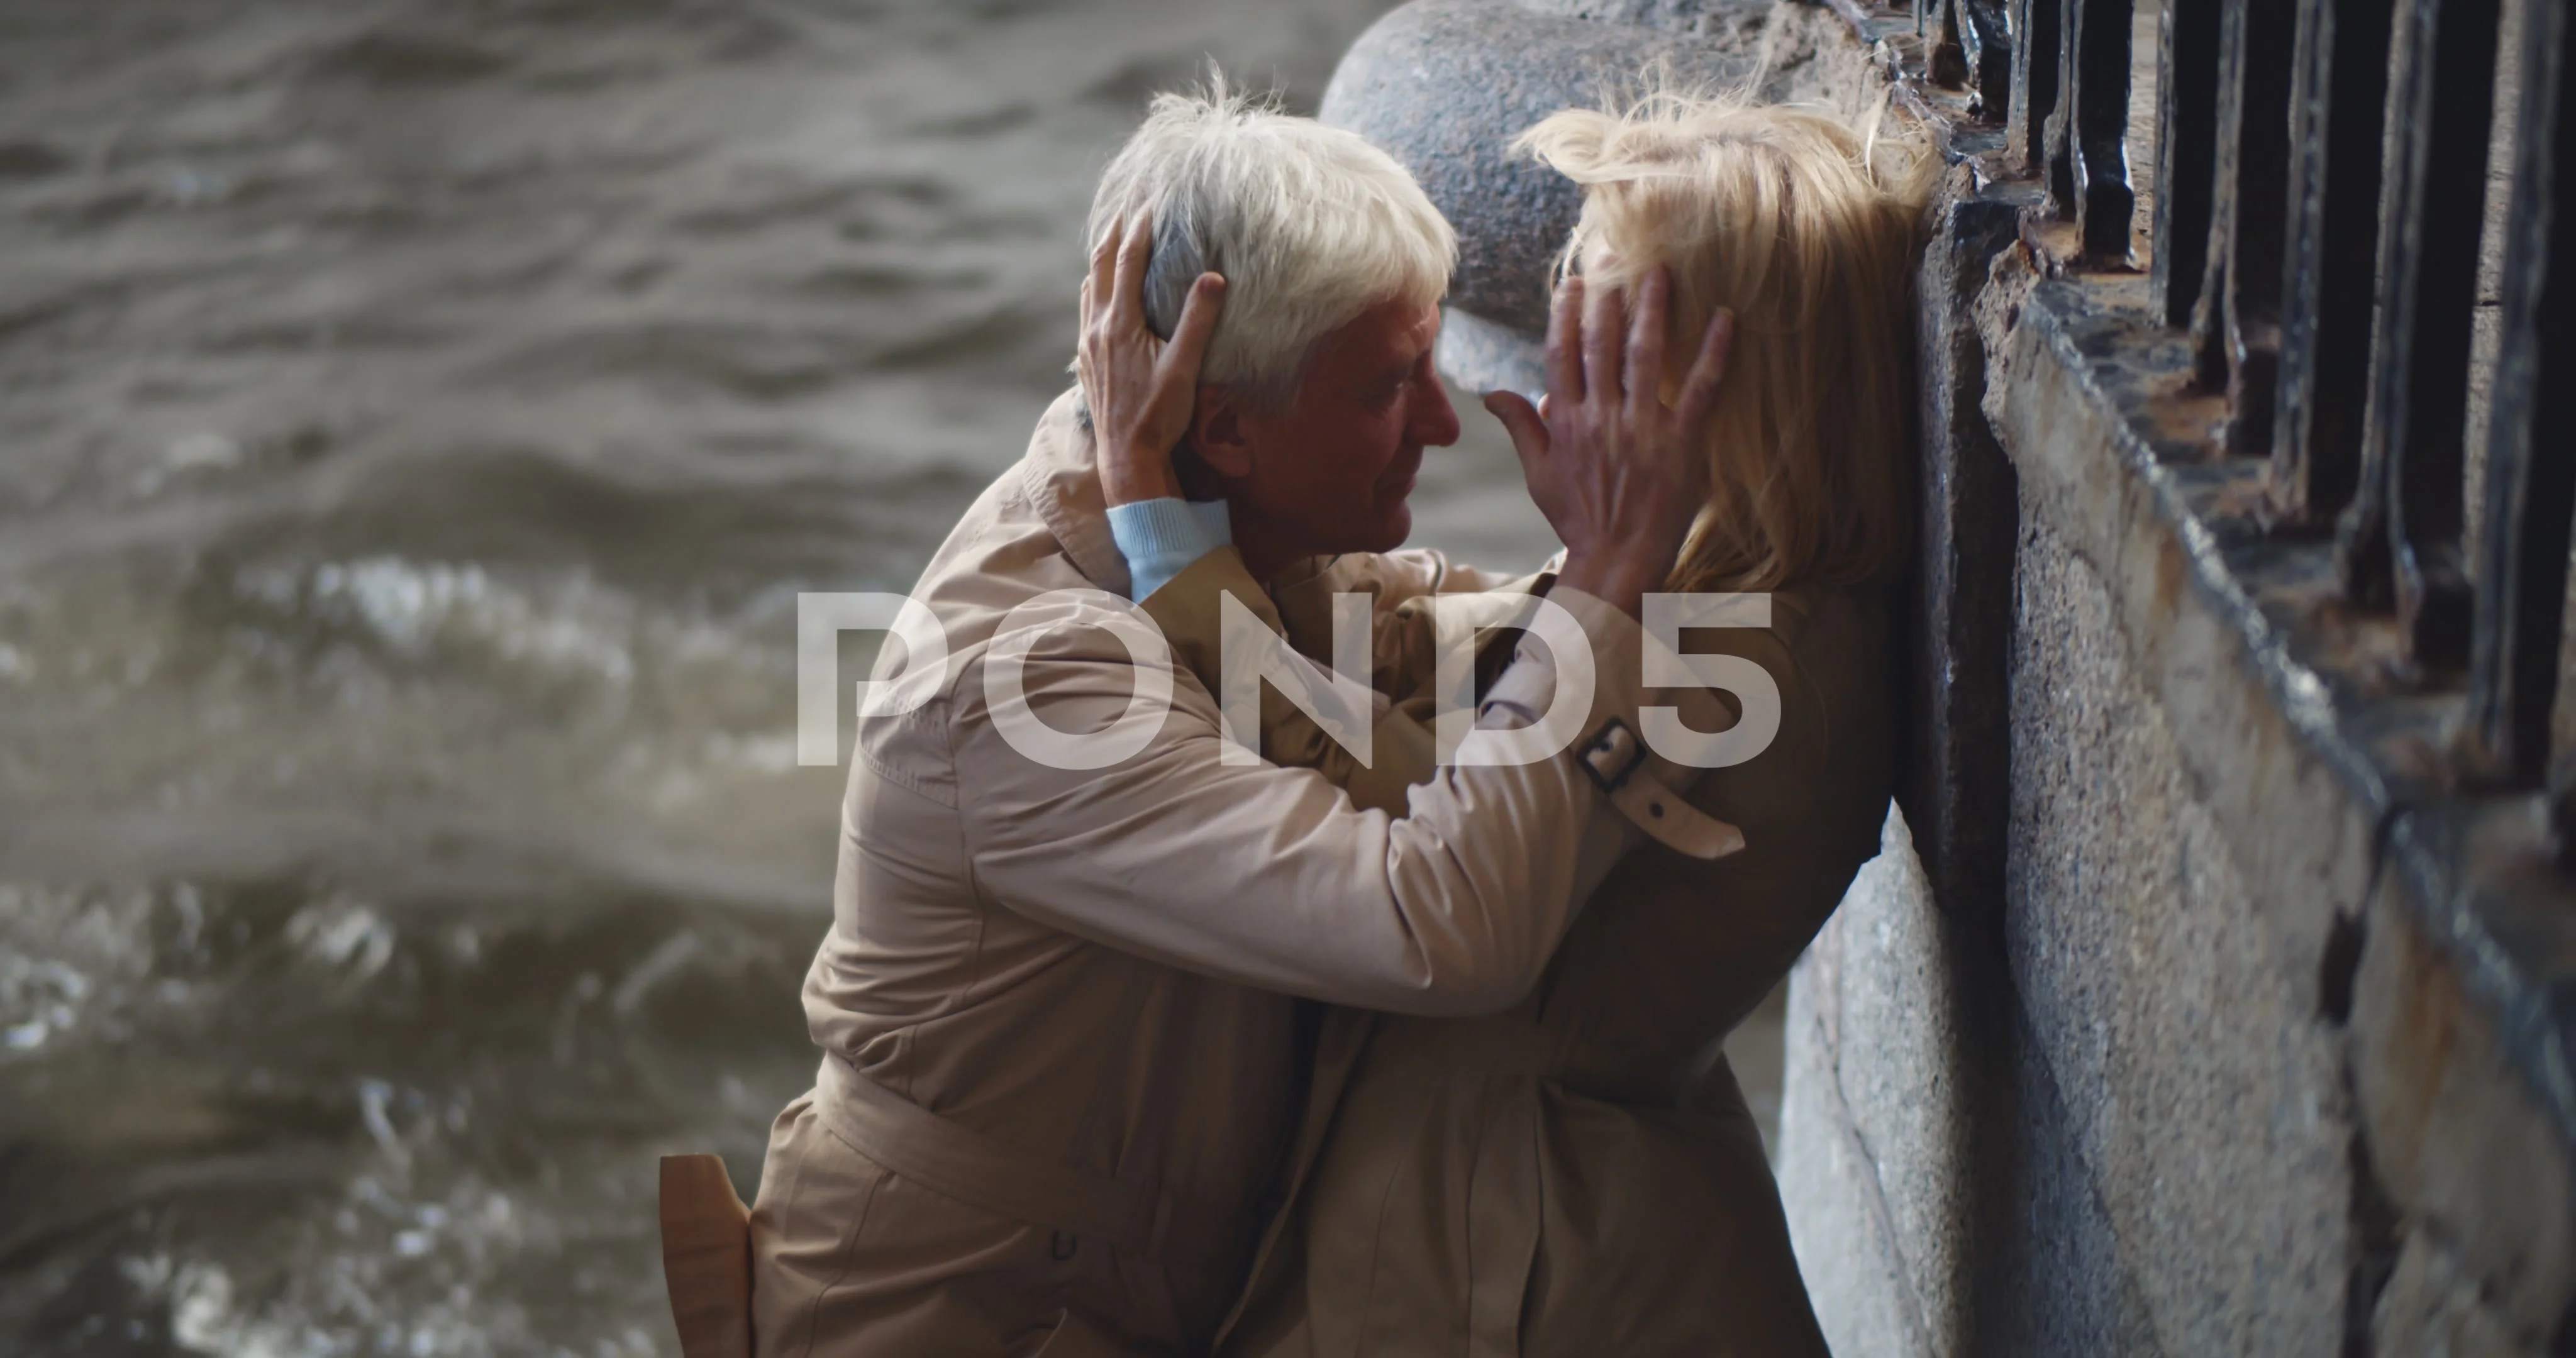 brock short share older couples making love photos